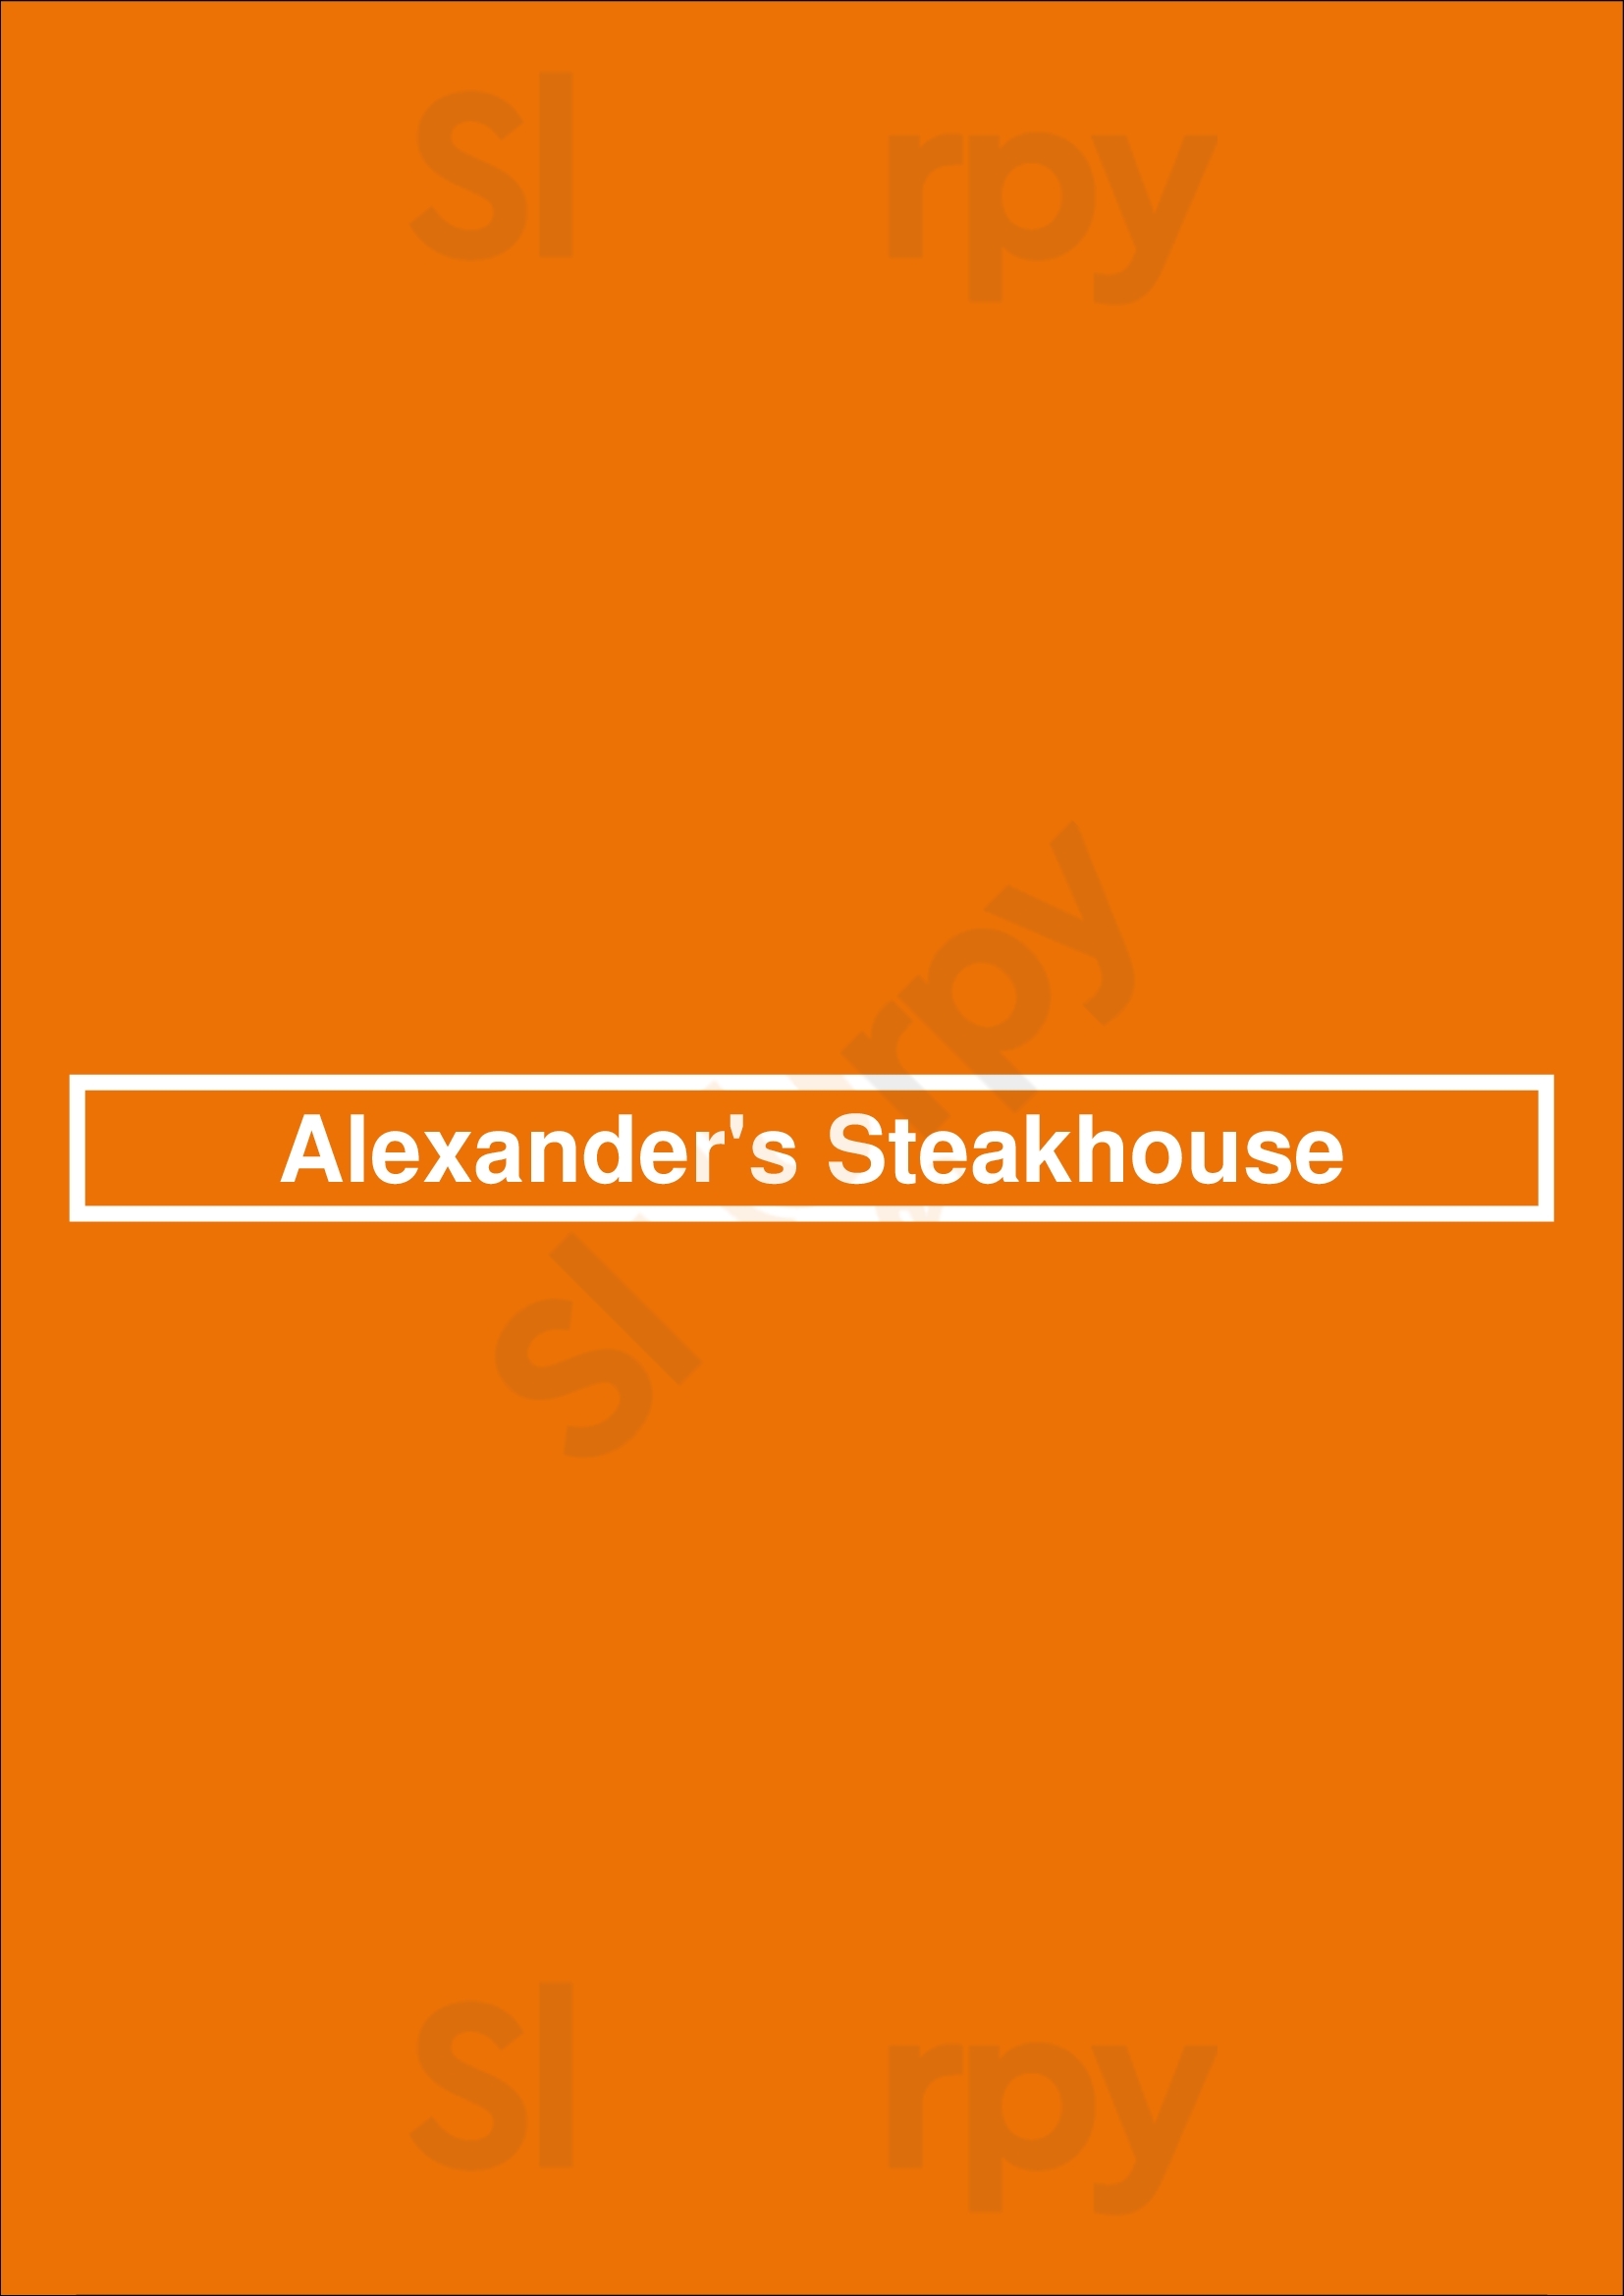 Alexander's Steakhouse San Francisco Menu - 1